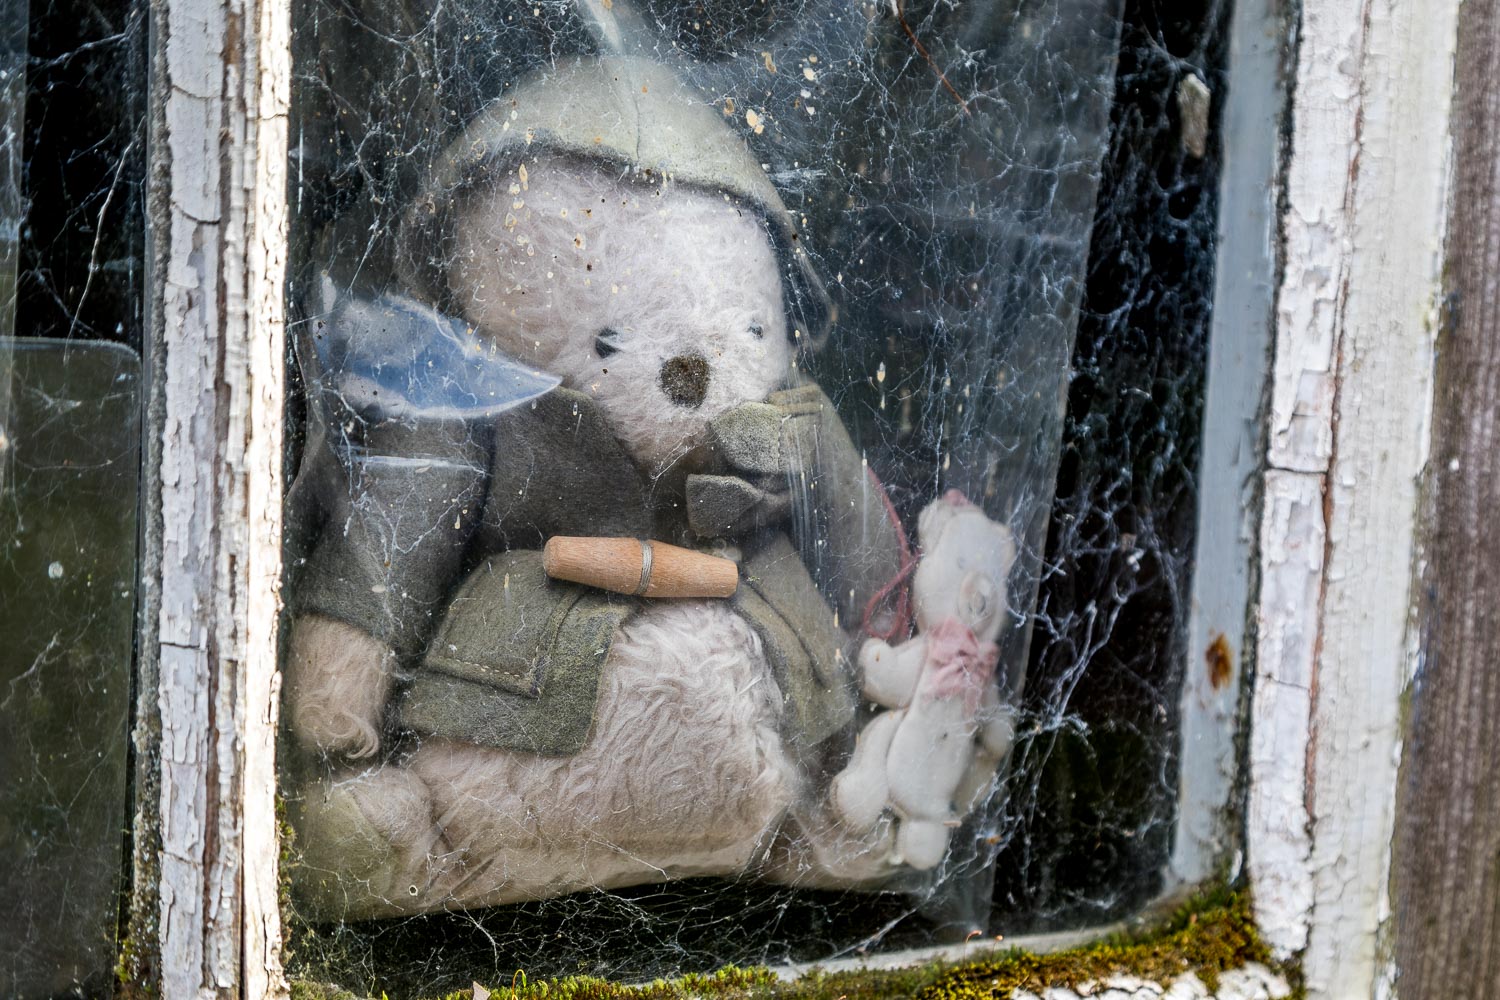 Teddy in the Window at Brandelhow